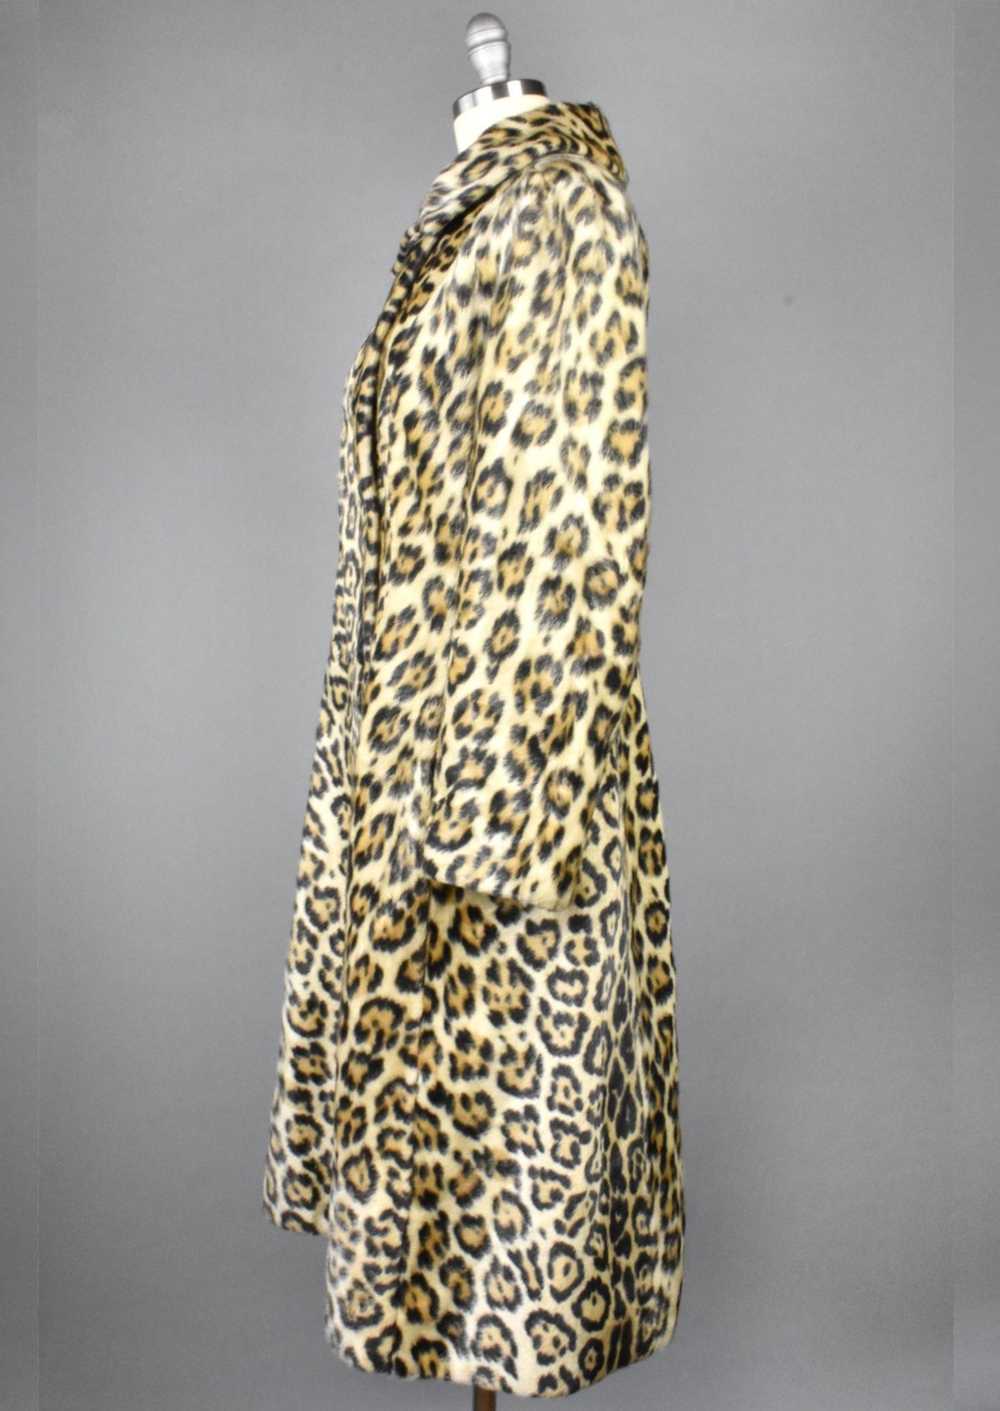 Leopard Print Faux Fur Coat by Safari - image 4